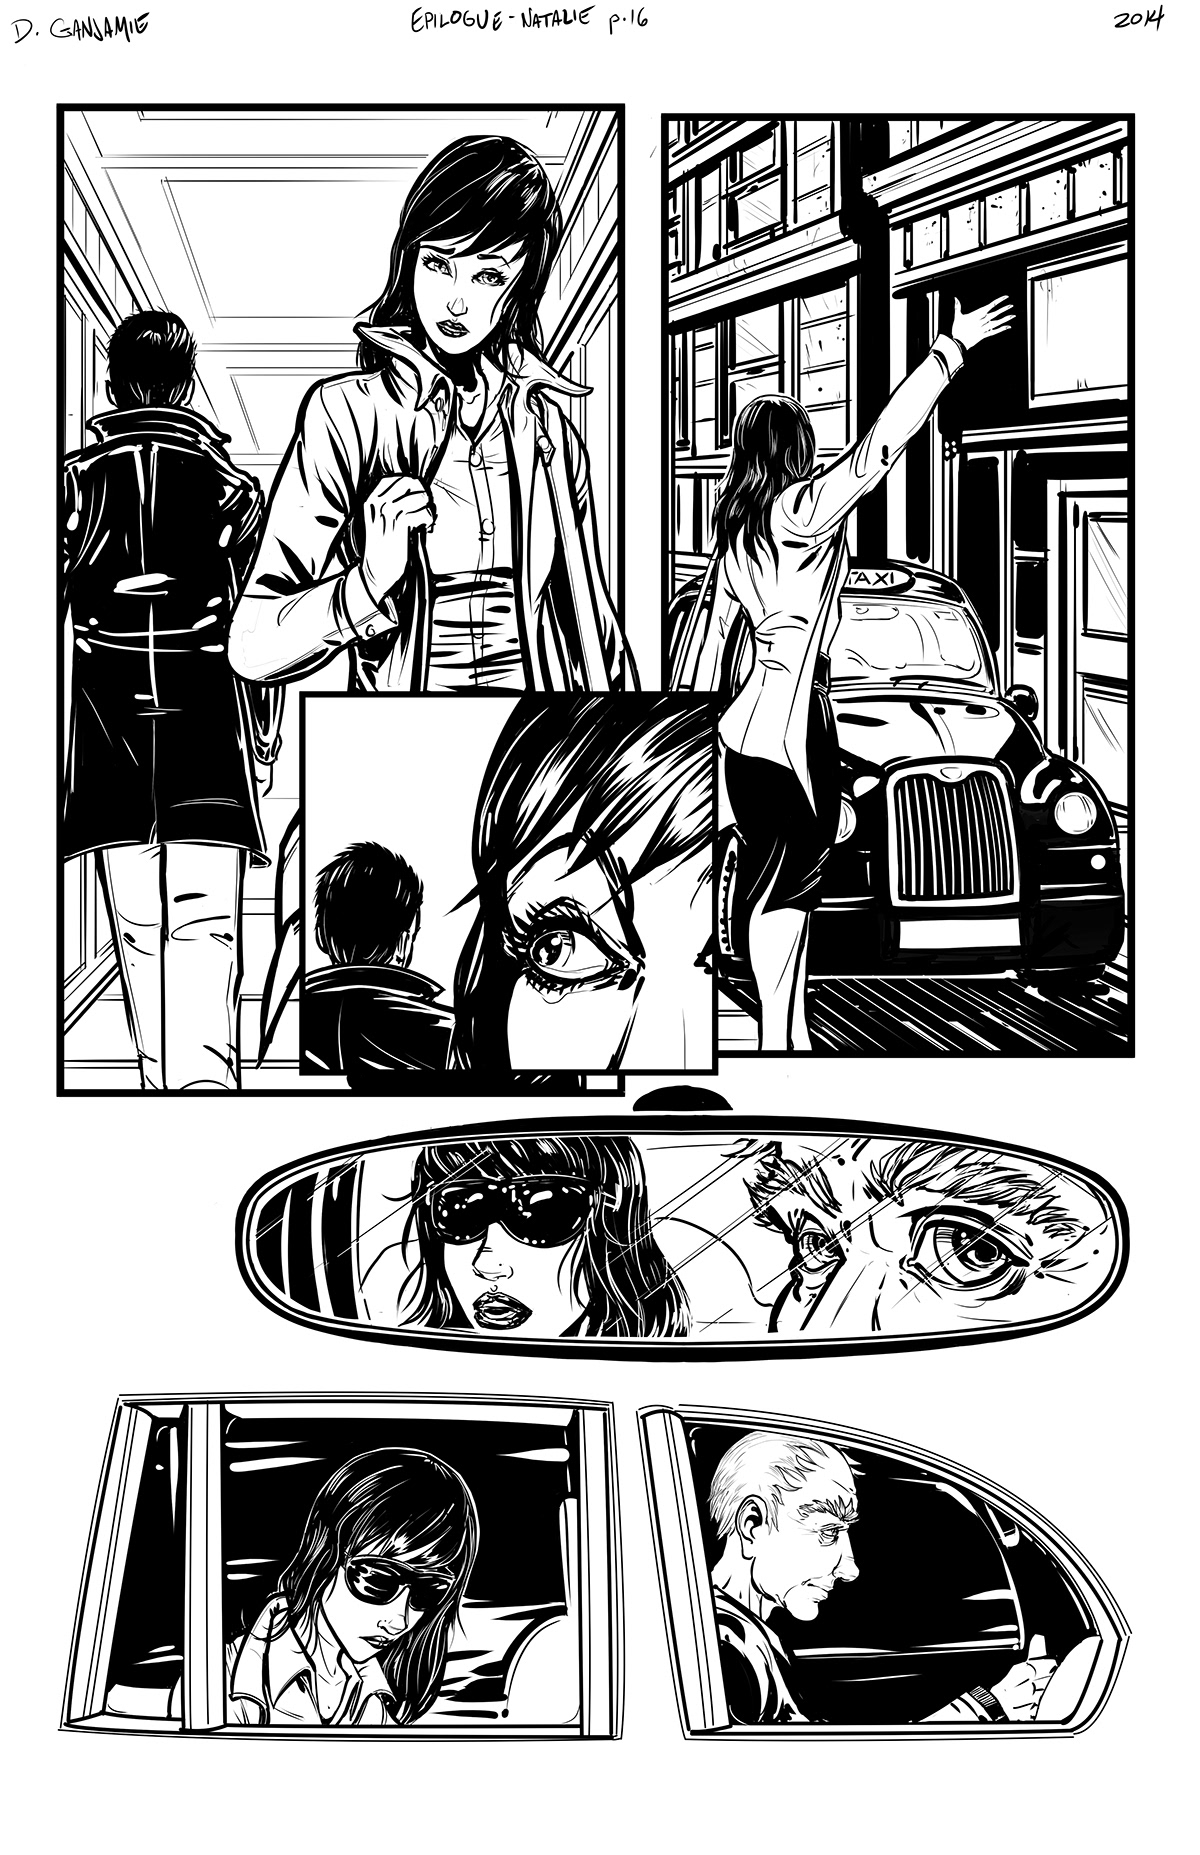 train station relationship drama comic